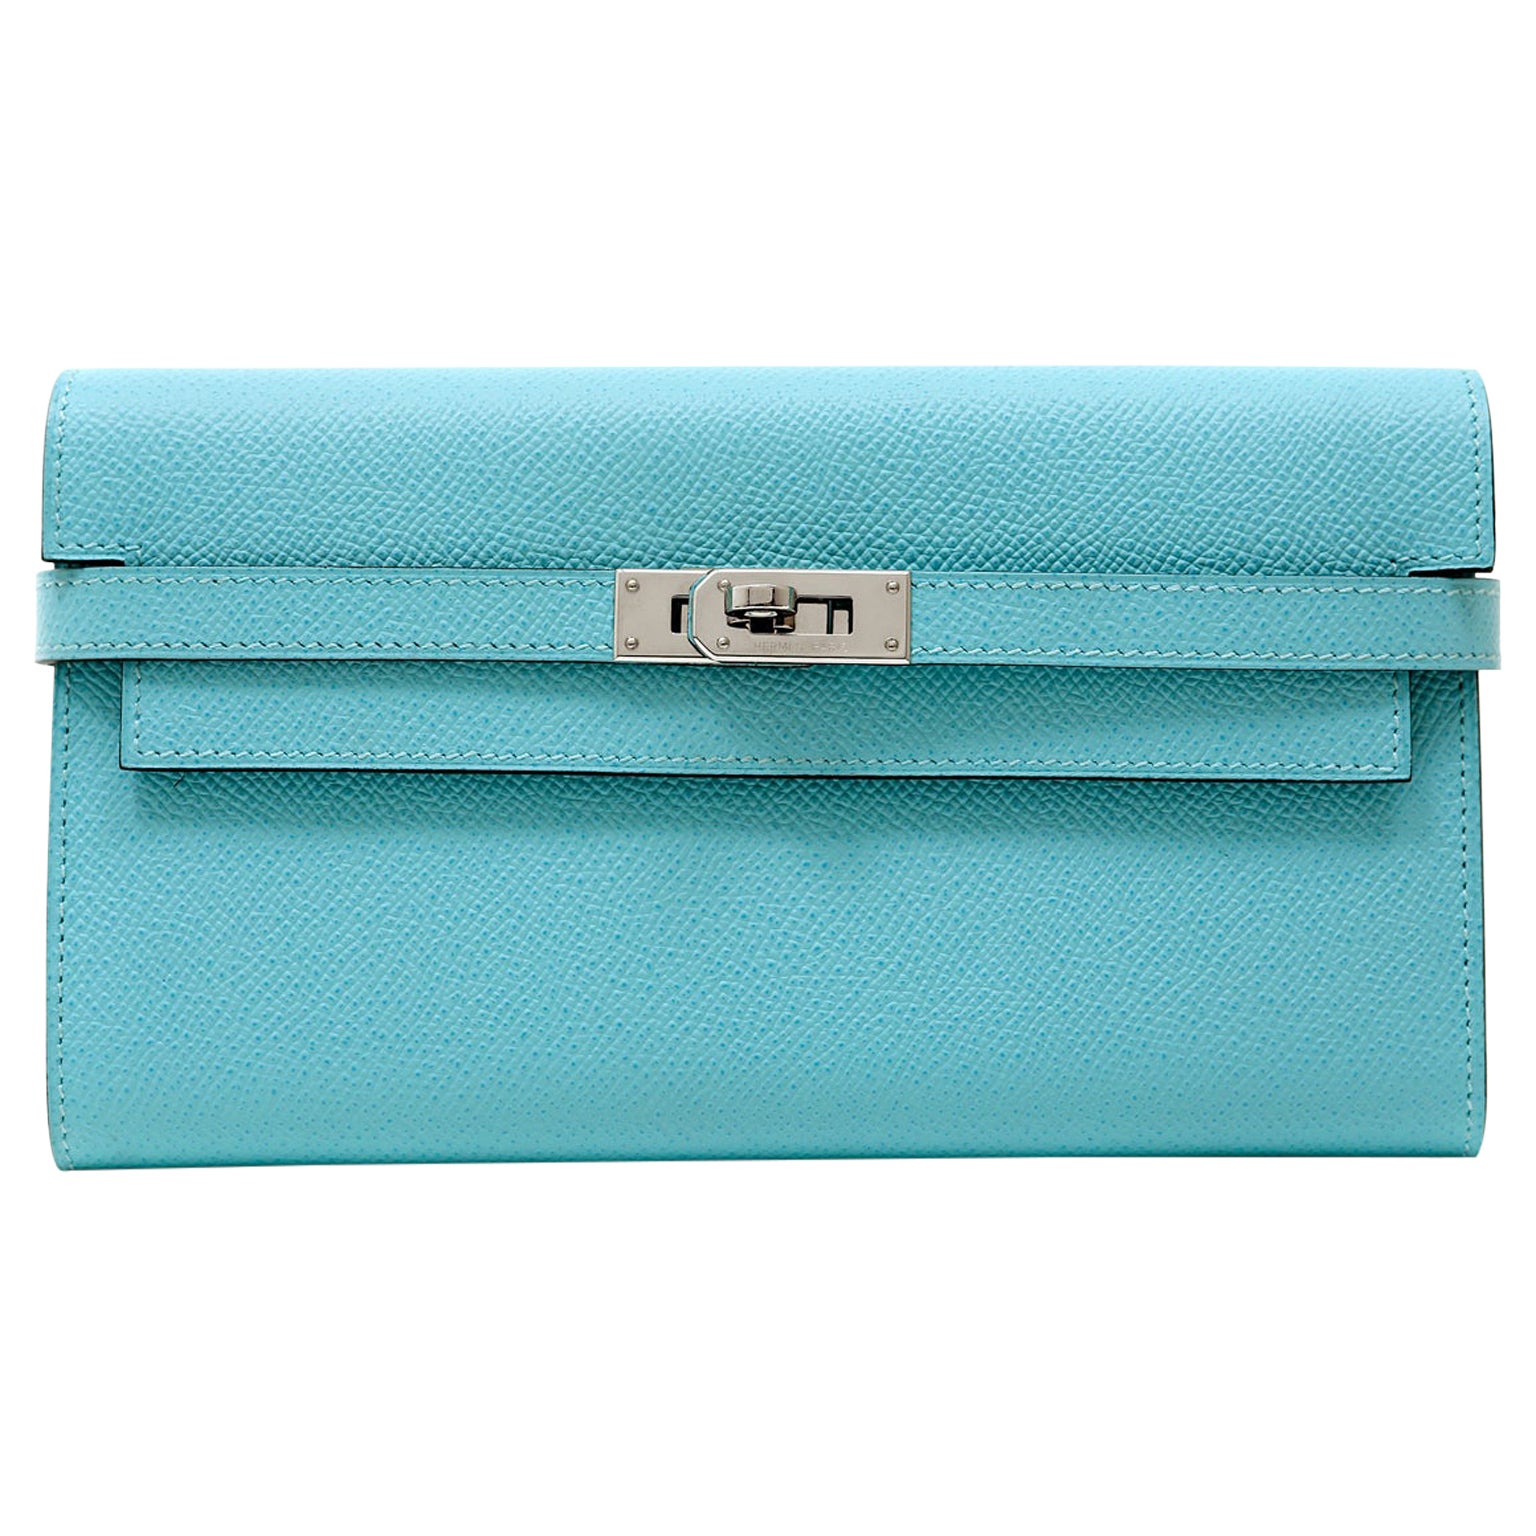 Tiffany Blue Wallet - For Sale on 1stDibs